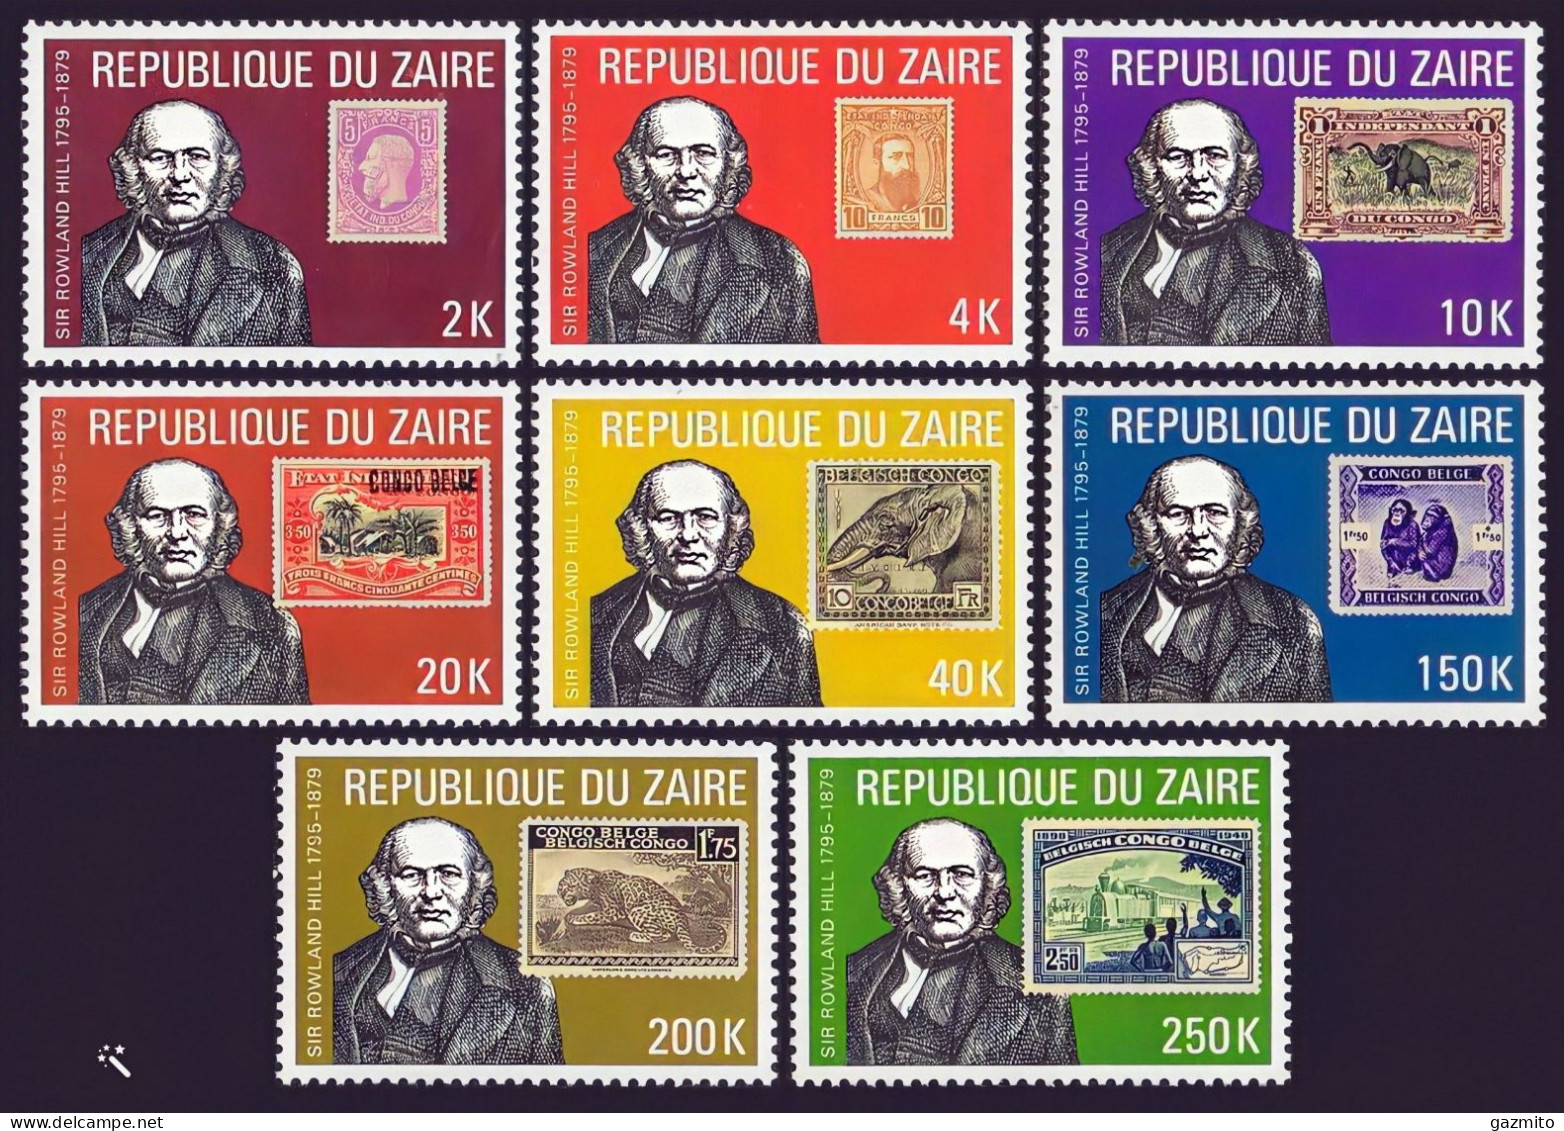 Zaire 1980, Rowland Hill, Stamp On Stamp, Wild Cat, Monkey, Elephant, 8val - Elefanti